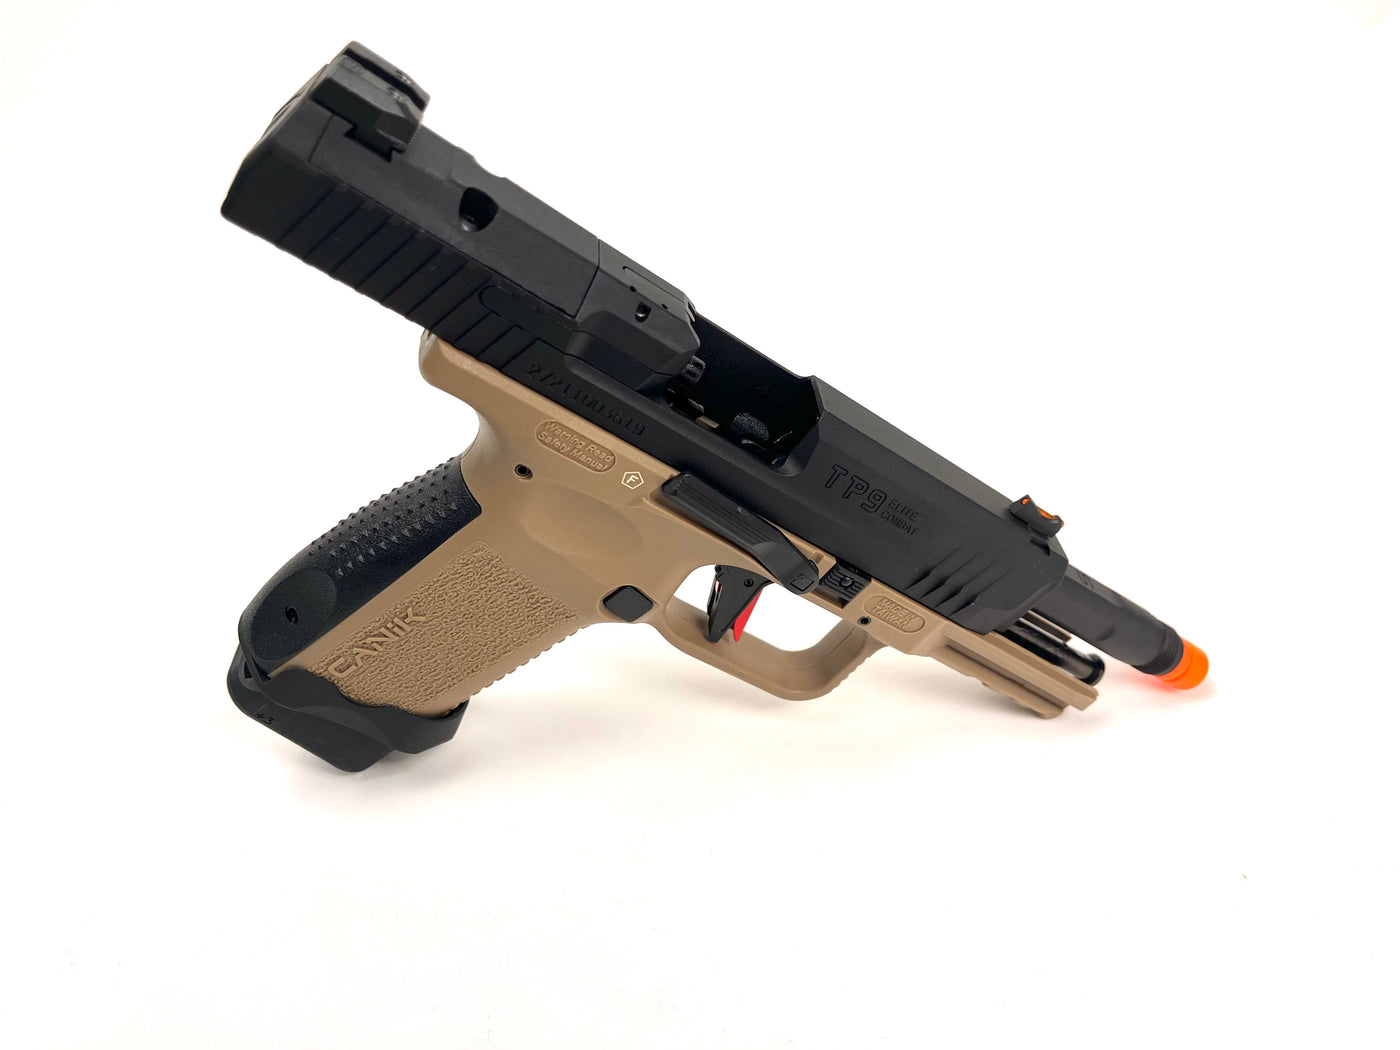 Canik x Salient Arms TP9 Elite Combat Pistol Licensed by Cybergun